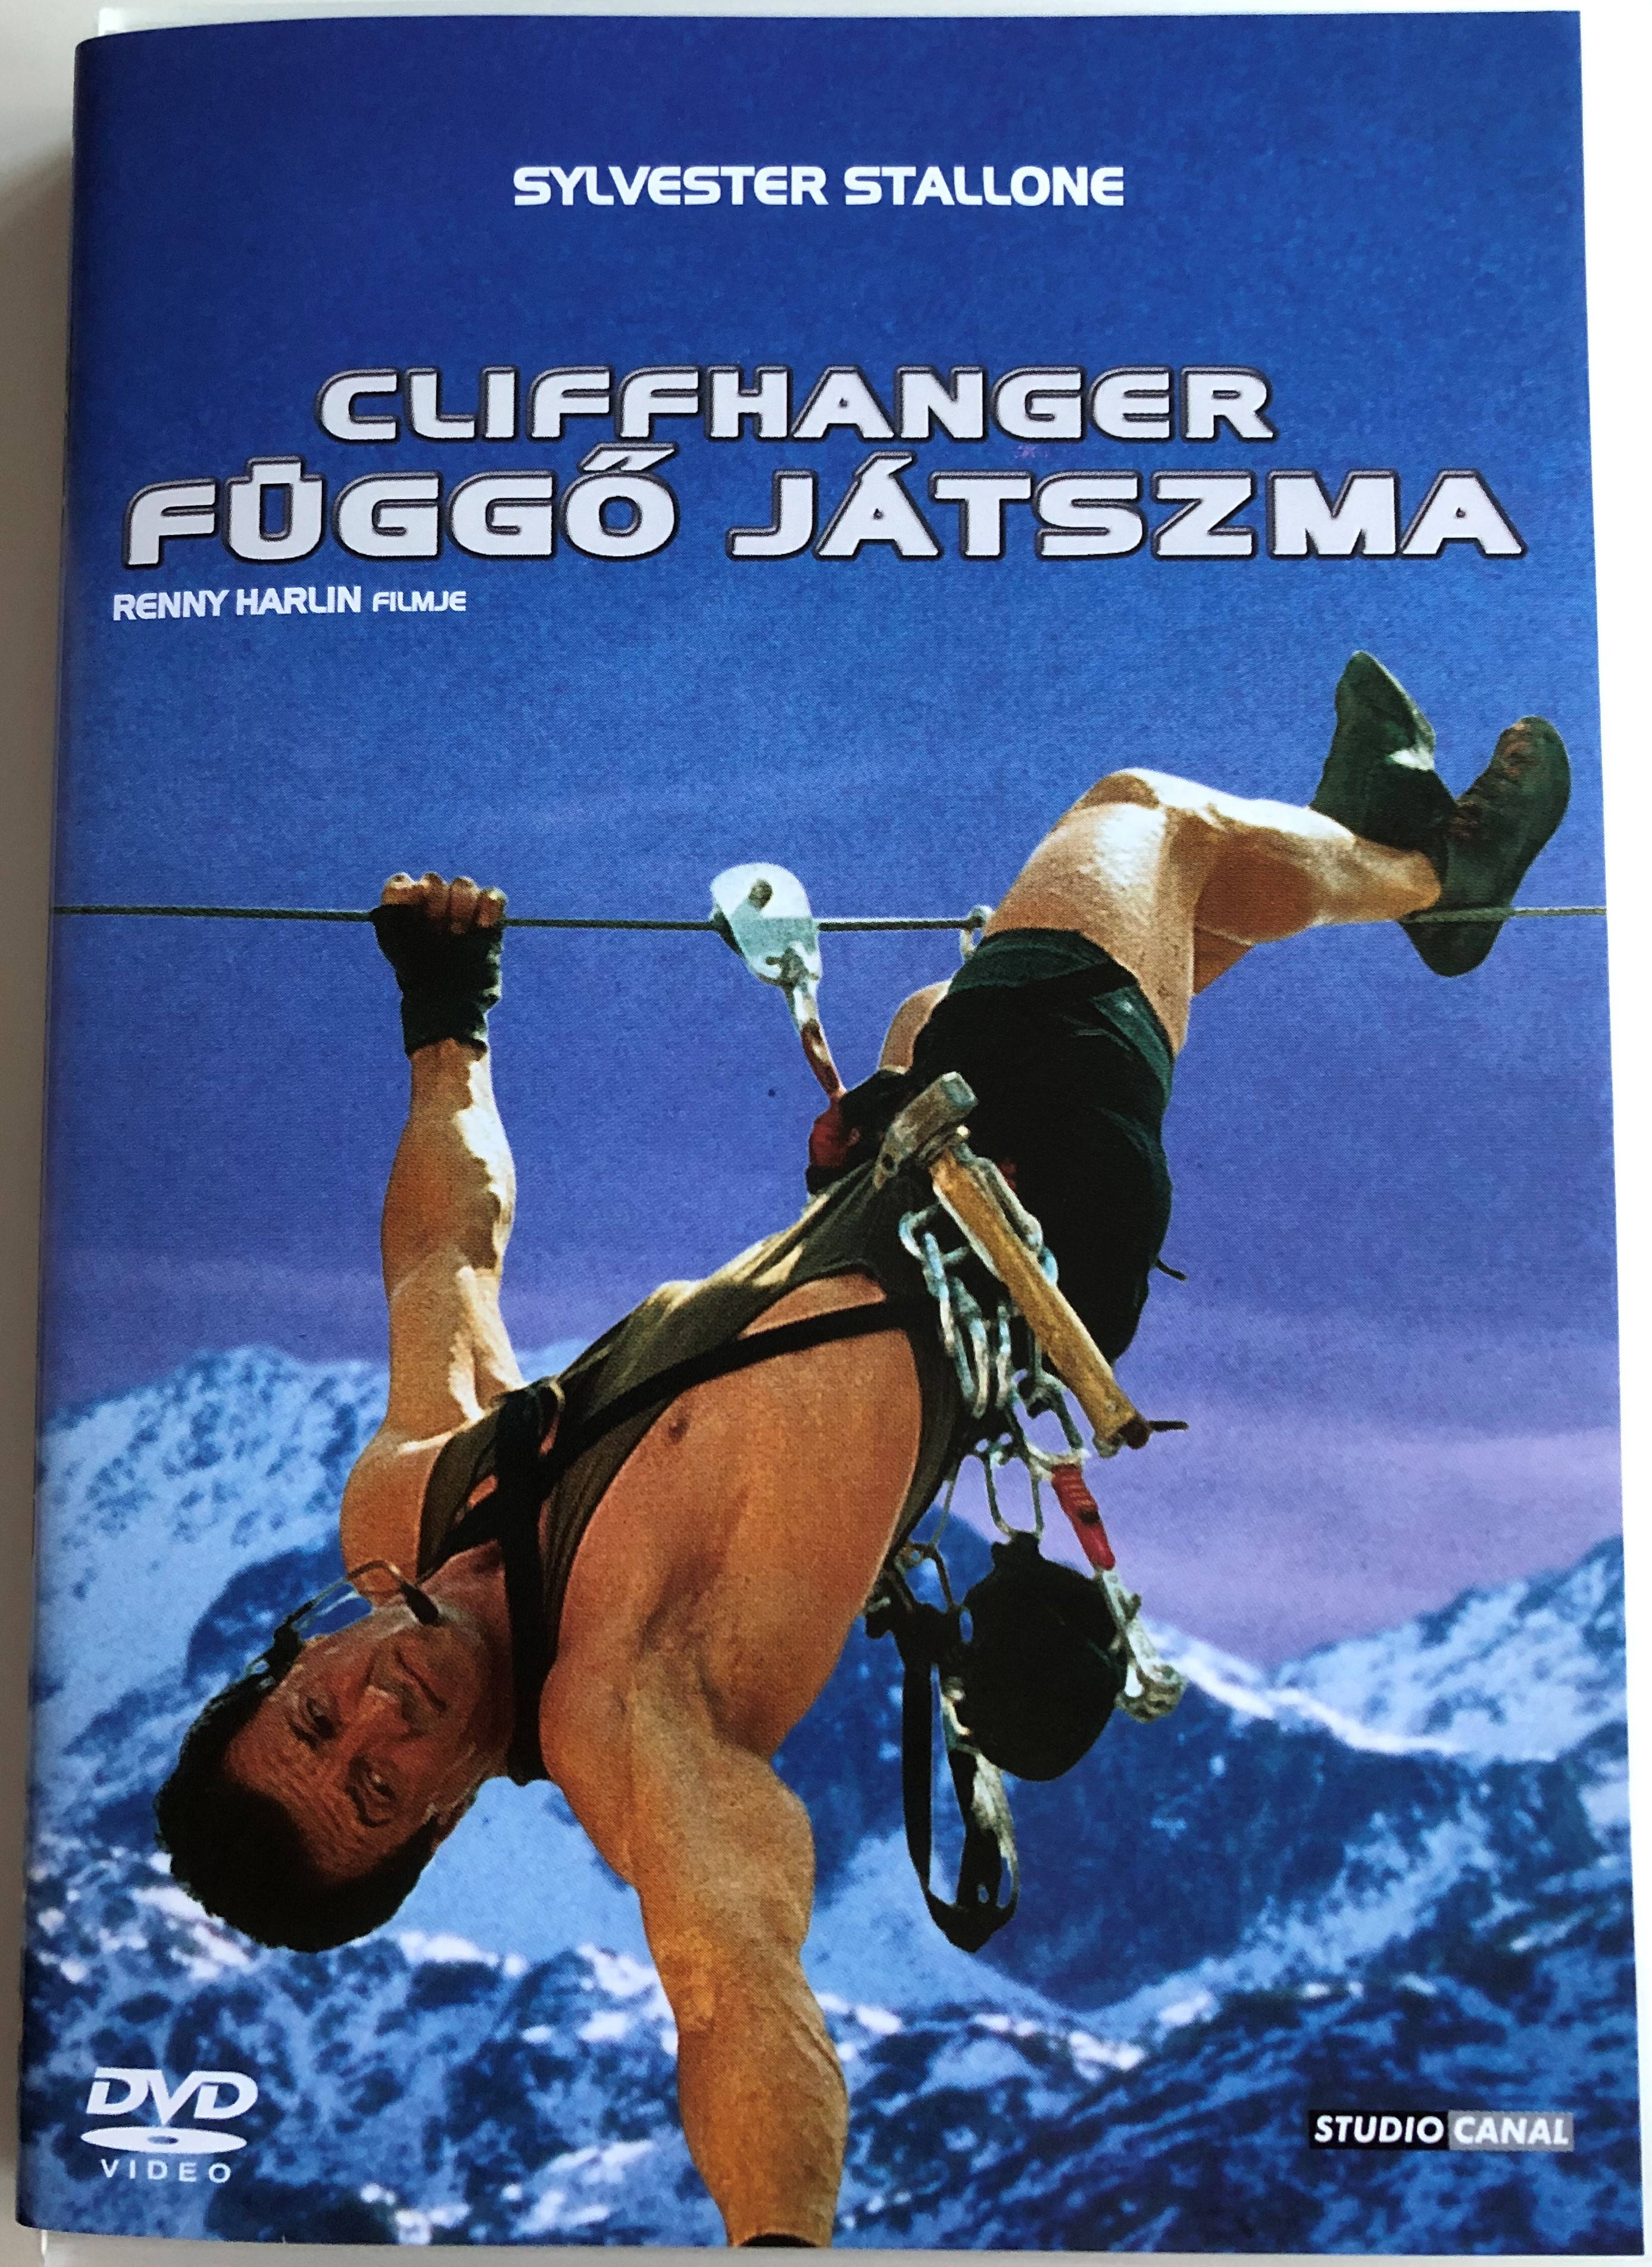 Cliffhanger 1993 Függő Játszma DVD / Directed by Renny Harlin / Starring:  Sylvester Stallone, John Lithgow, Michael Rooker, Janine Turner -  bibleinmylanguage